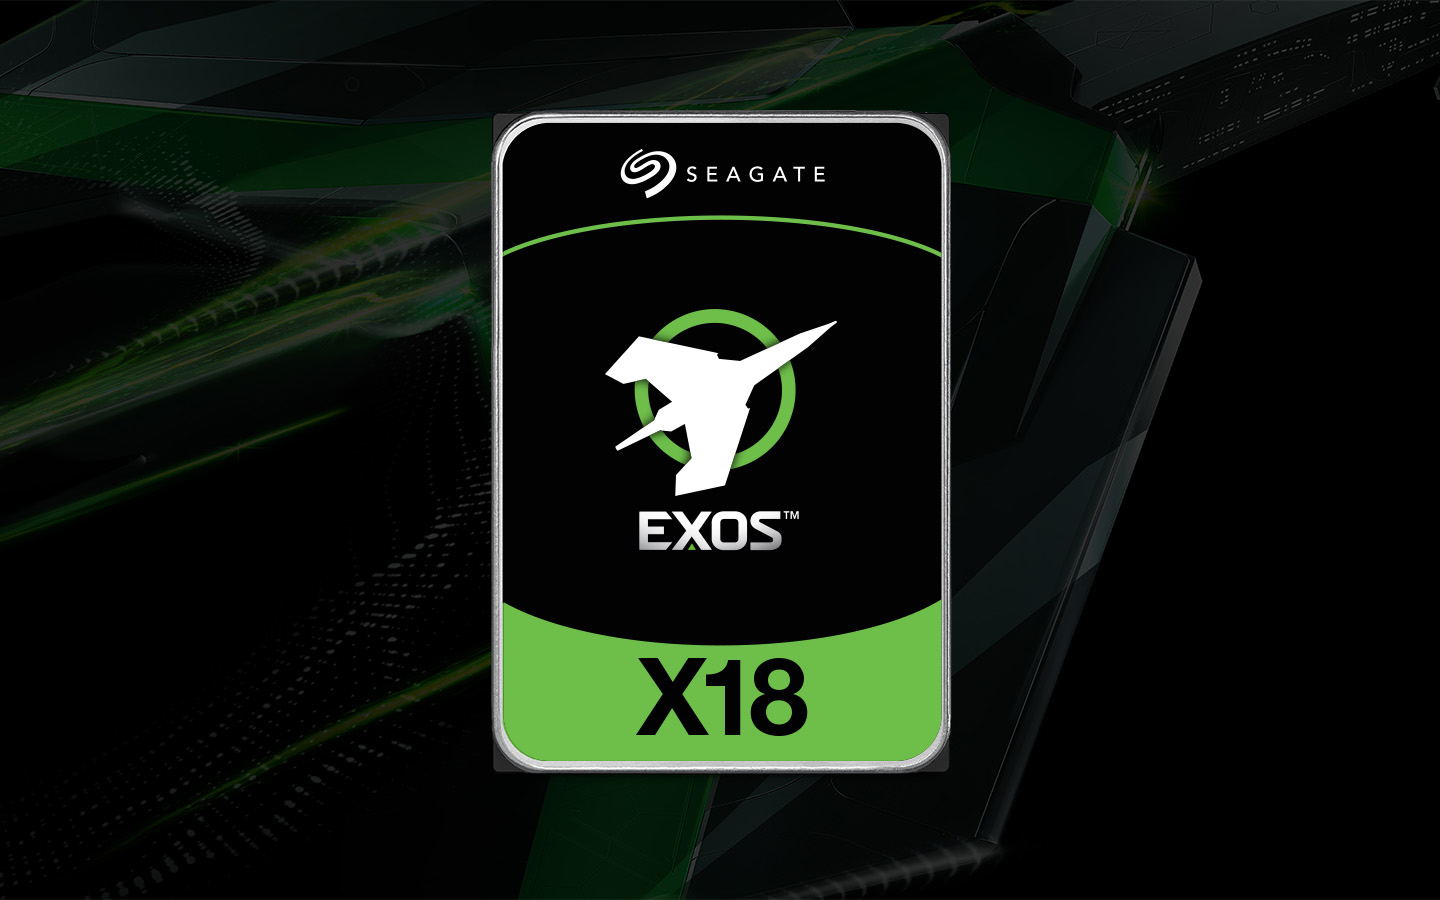 Seagate Exos X18ハードディスク・ドライブ | Seagate 日本